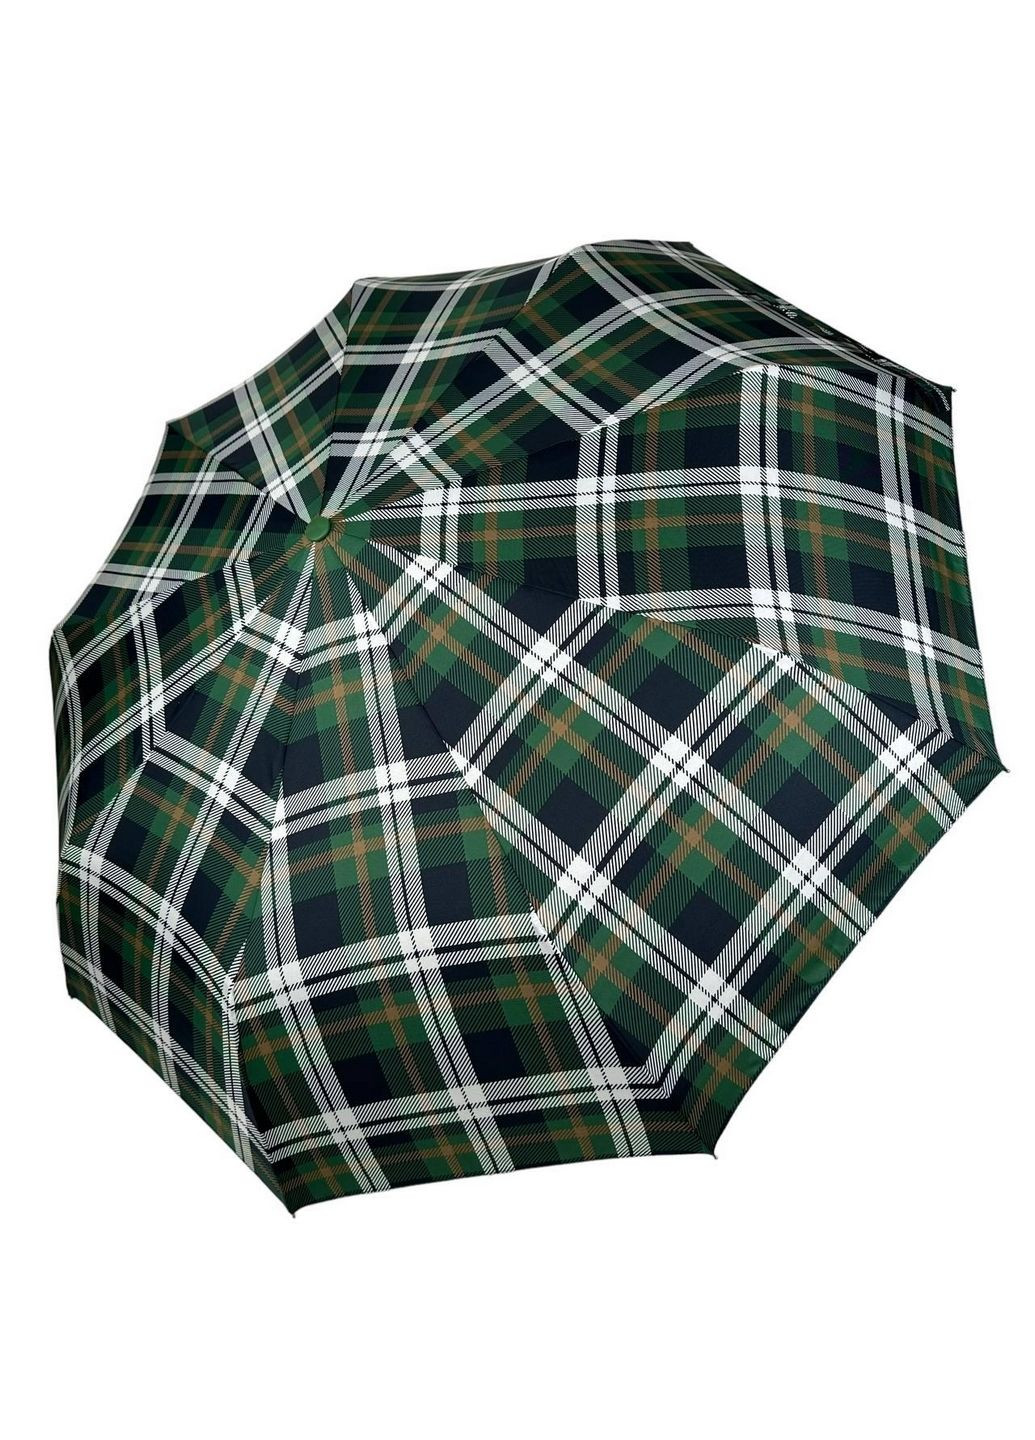 Зонт автомат Lantana (279310909)